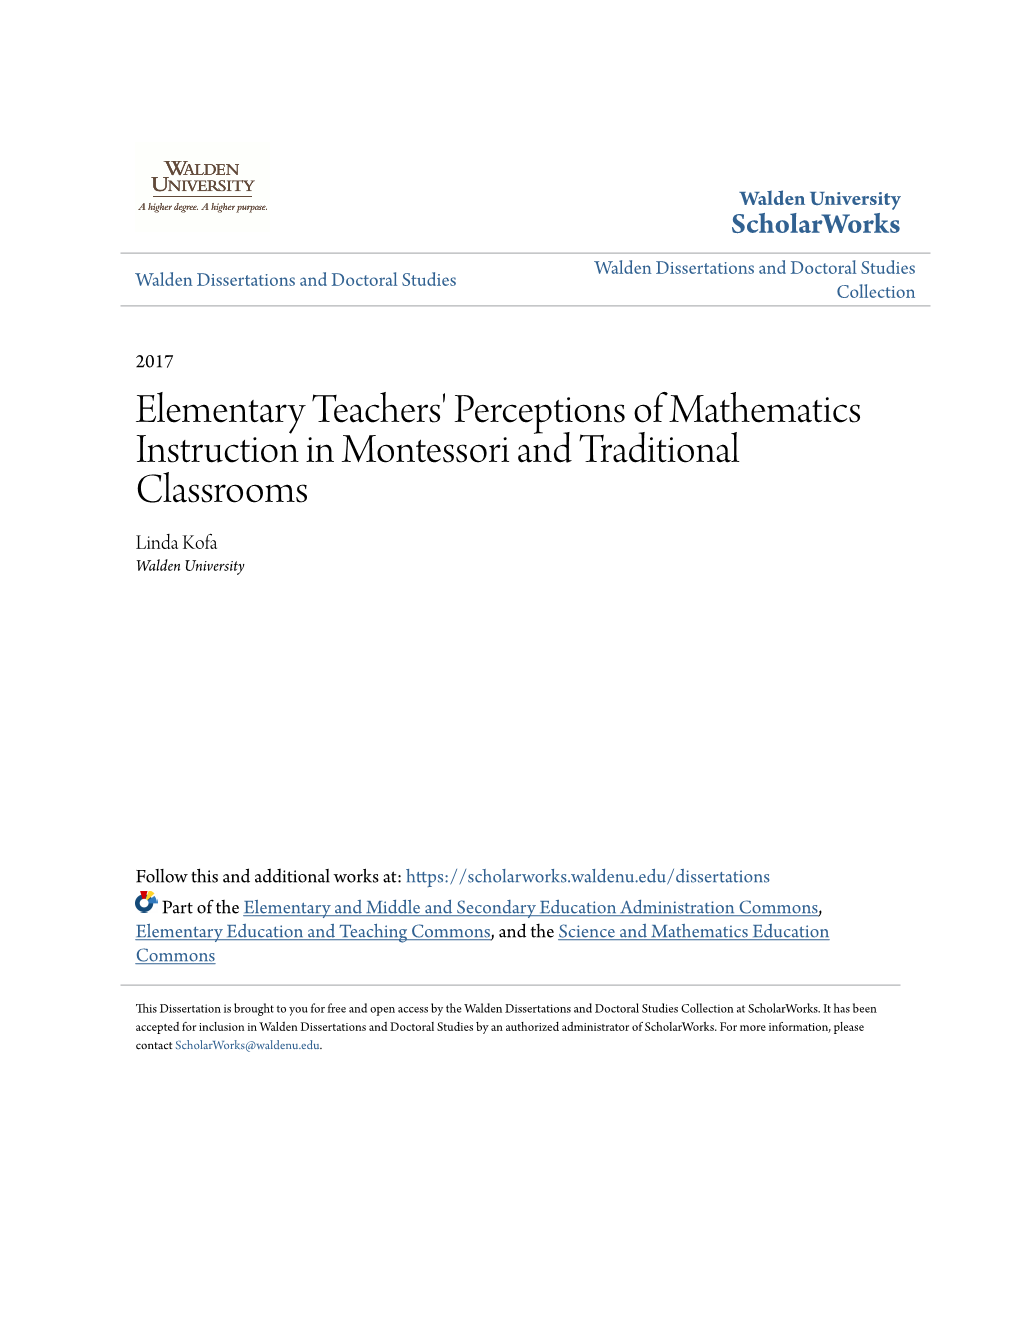 Elementary Teachers' Perceptions of Mathematics Instruction in Montessori and Traditional Classrooms Linda Kofa Walden University